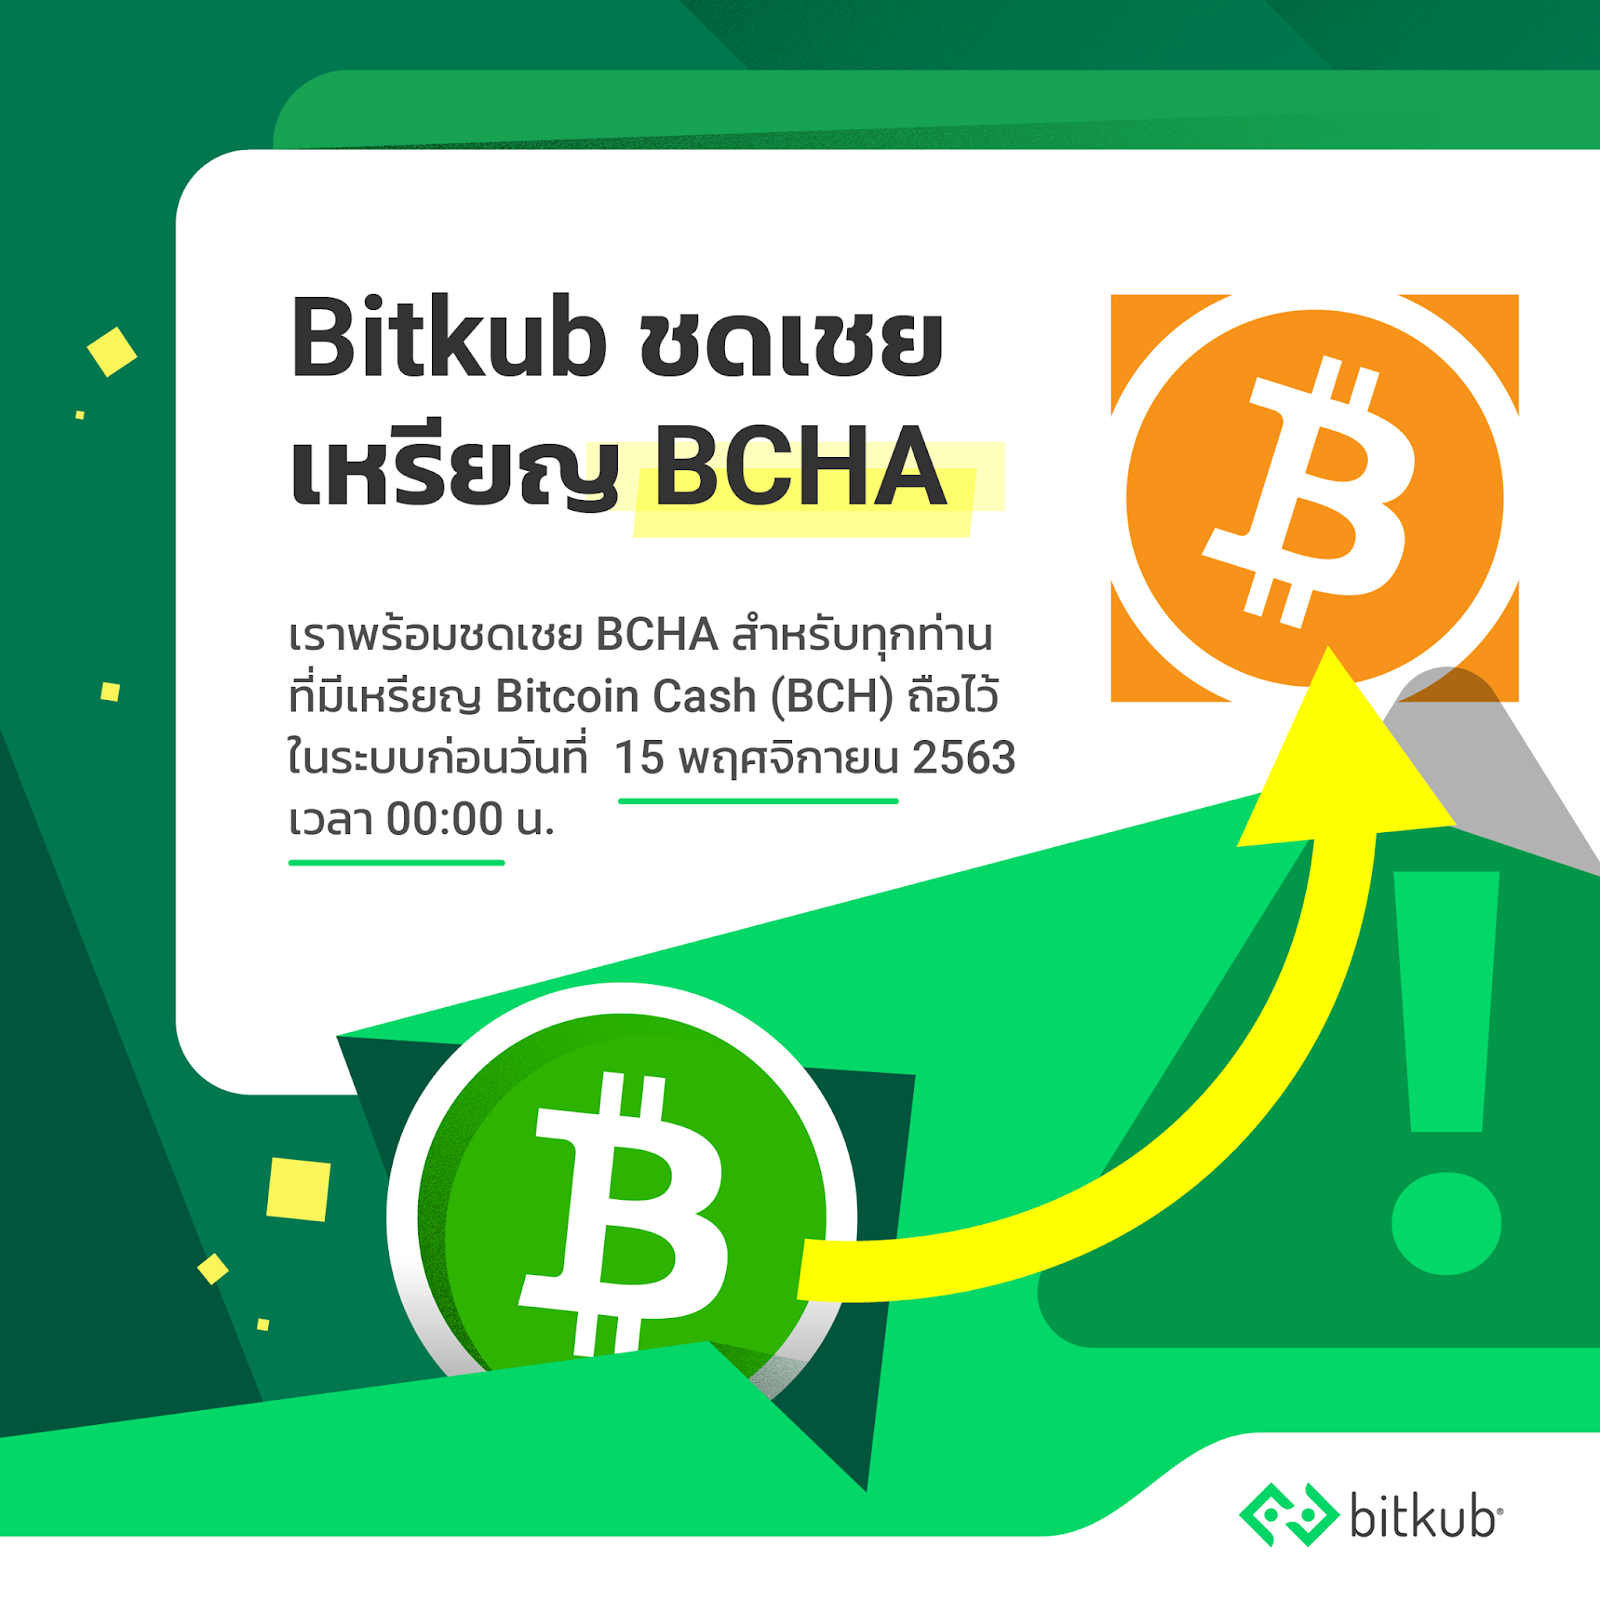 Bitkub补偿错过比特币现金ABC硬分叉的泰国投资者